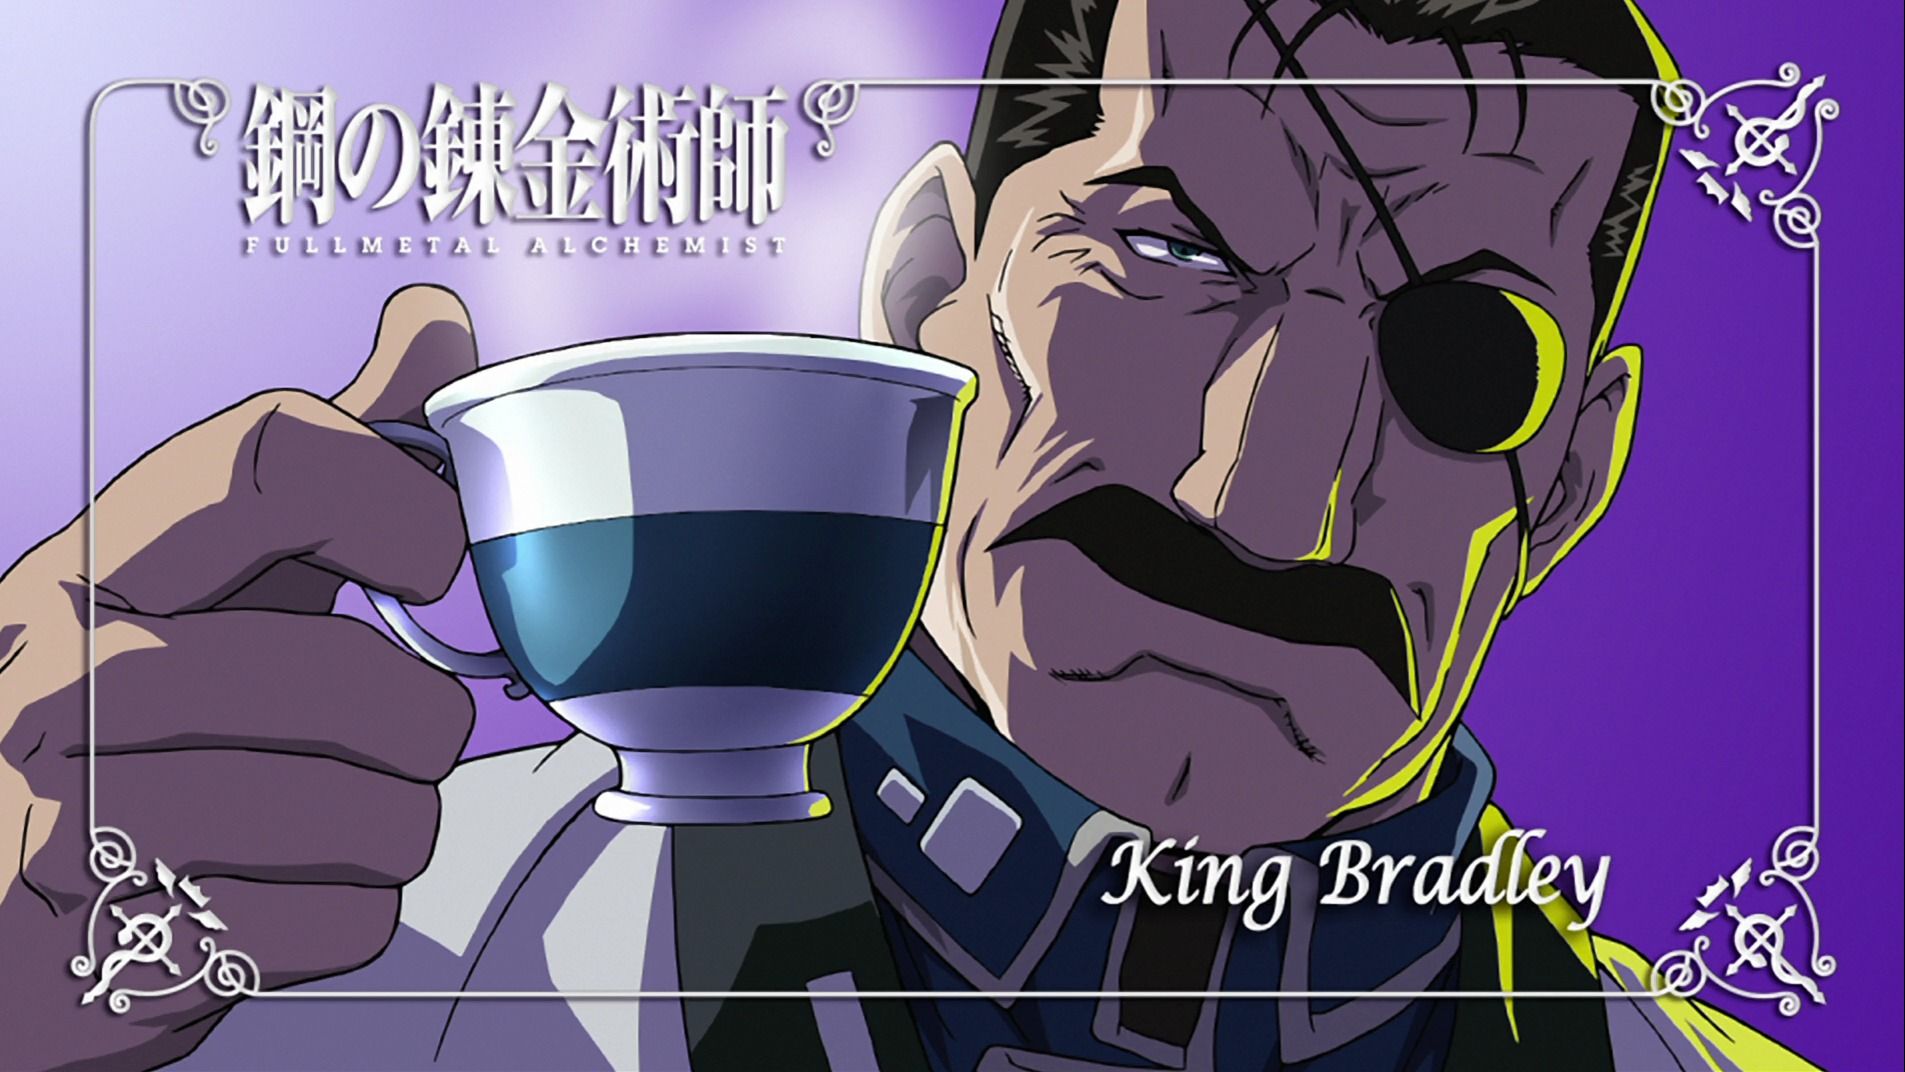 Download wallpaper from anime FullMetal Alchemist with tags: Desktop, Fullmetal Alchemist, Wrath, King Bradley